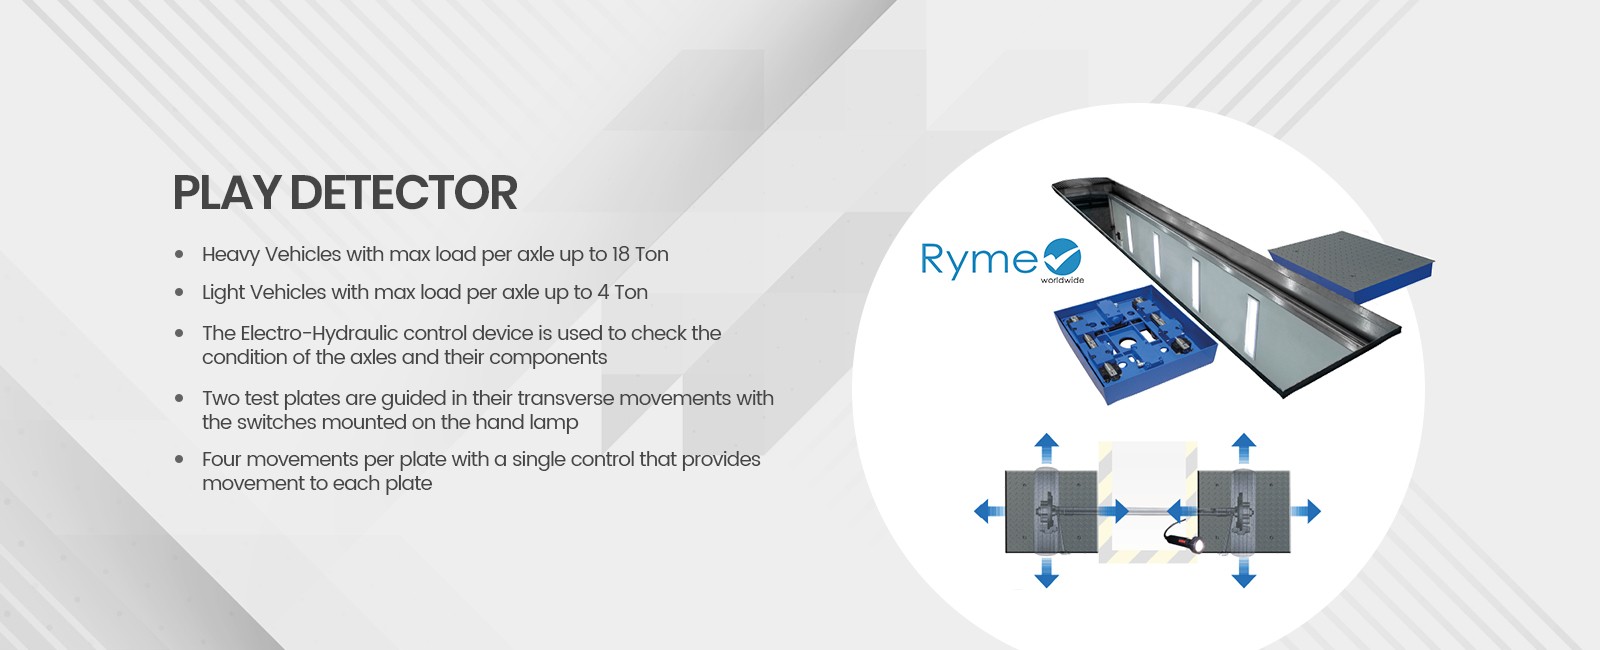 Ryme Play Detectors